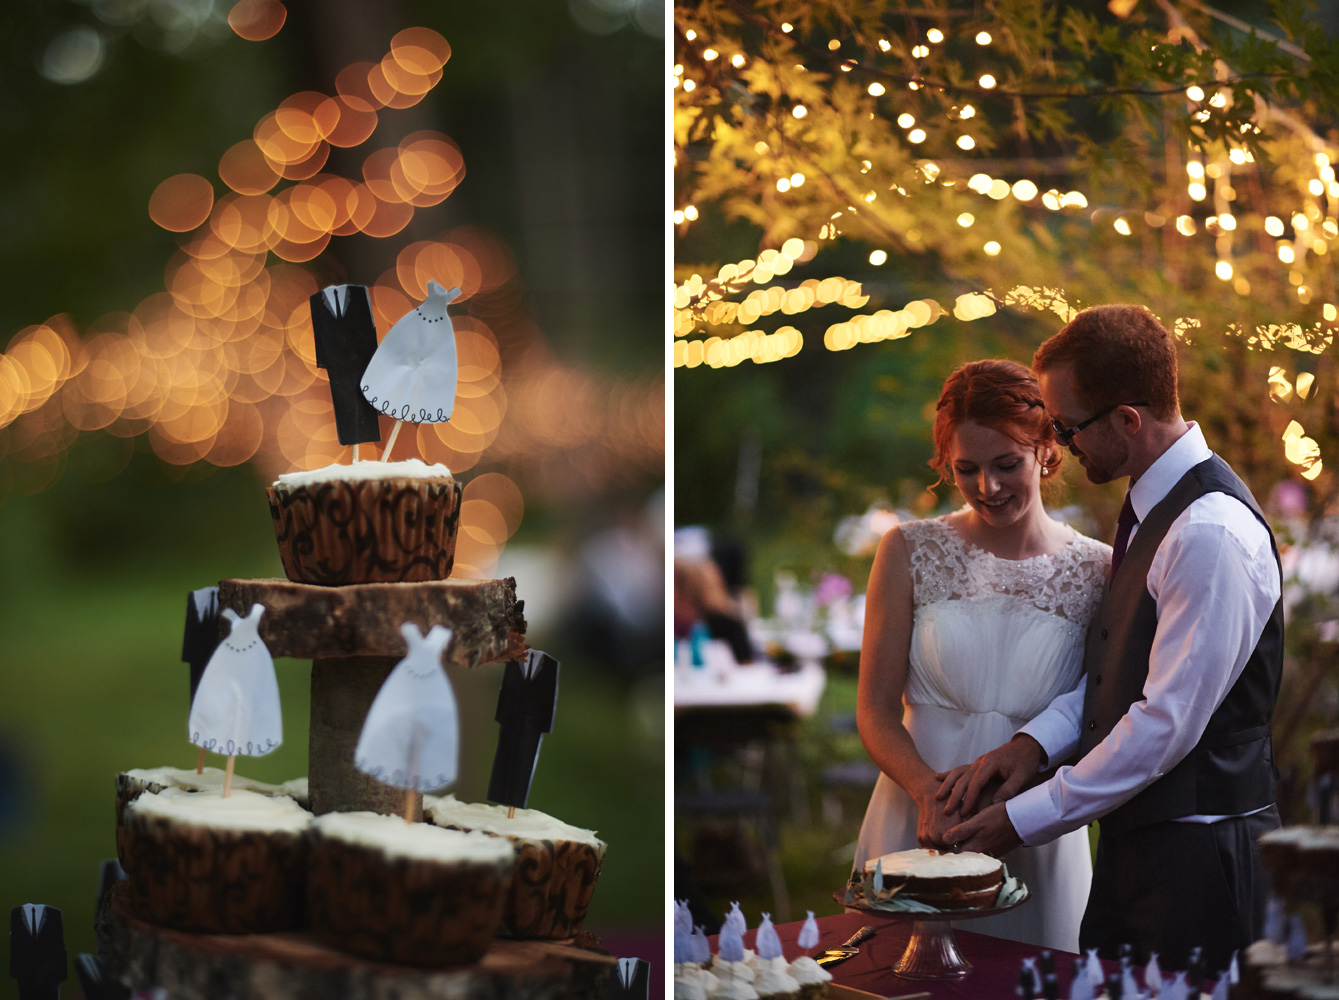 Bride-and-groom-cutting-the-cake.jpg